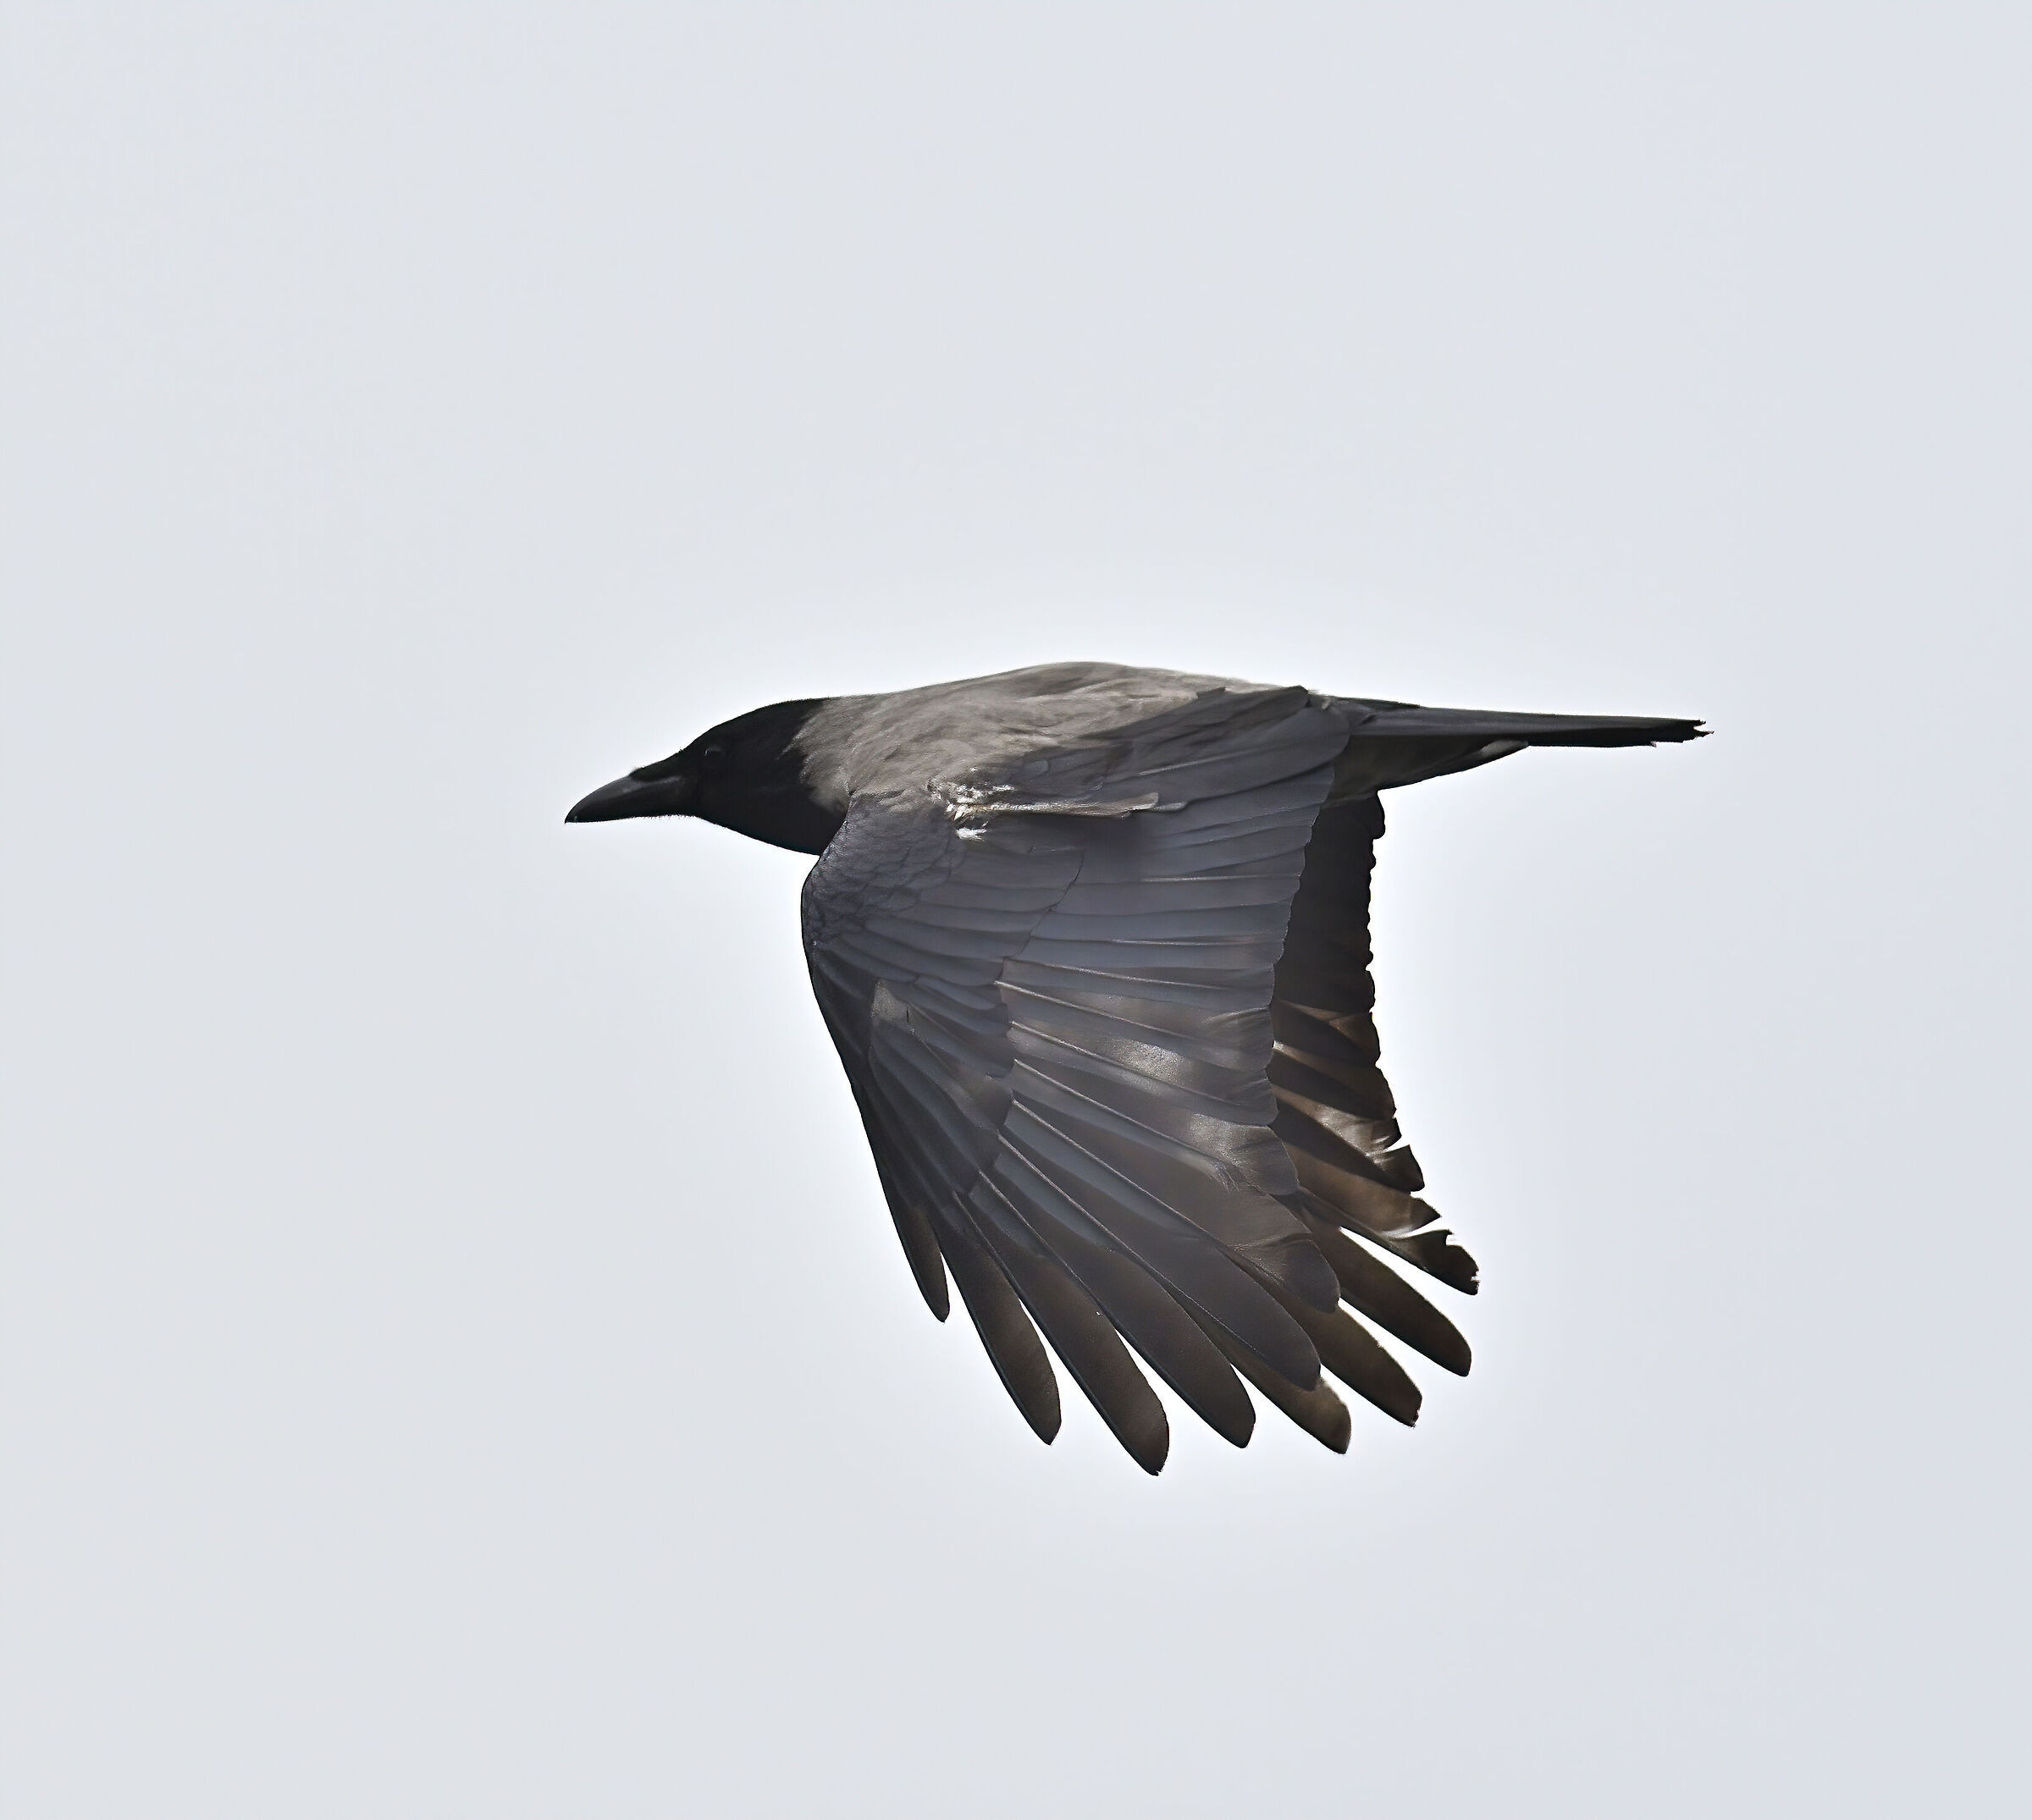 Crows in flight...